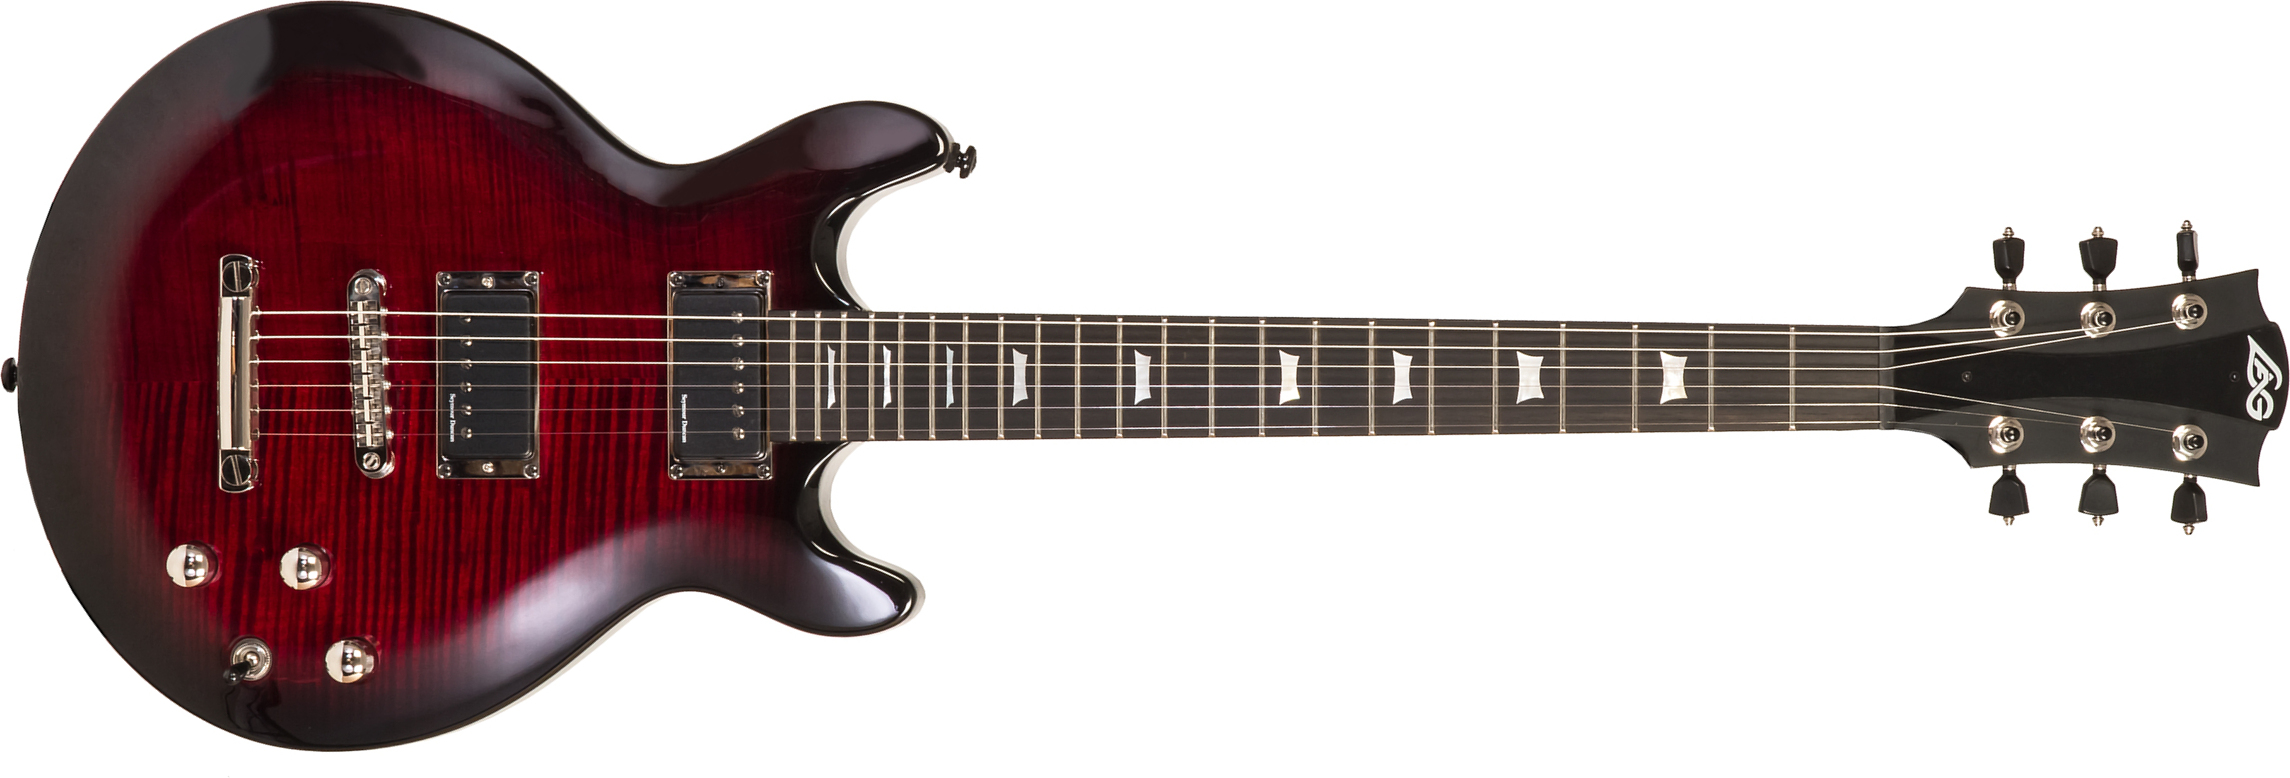 Lag Roxane R500 2h Seymour Duncan Ht Bw - Cherry Shadow - Double cut electric guitar - Main picture